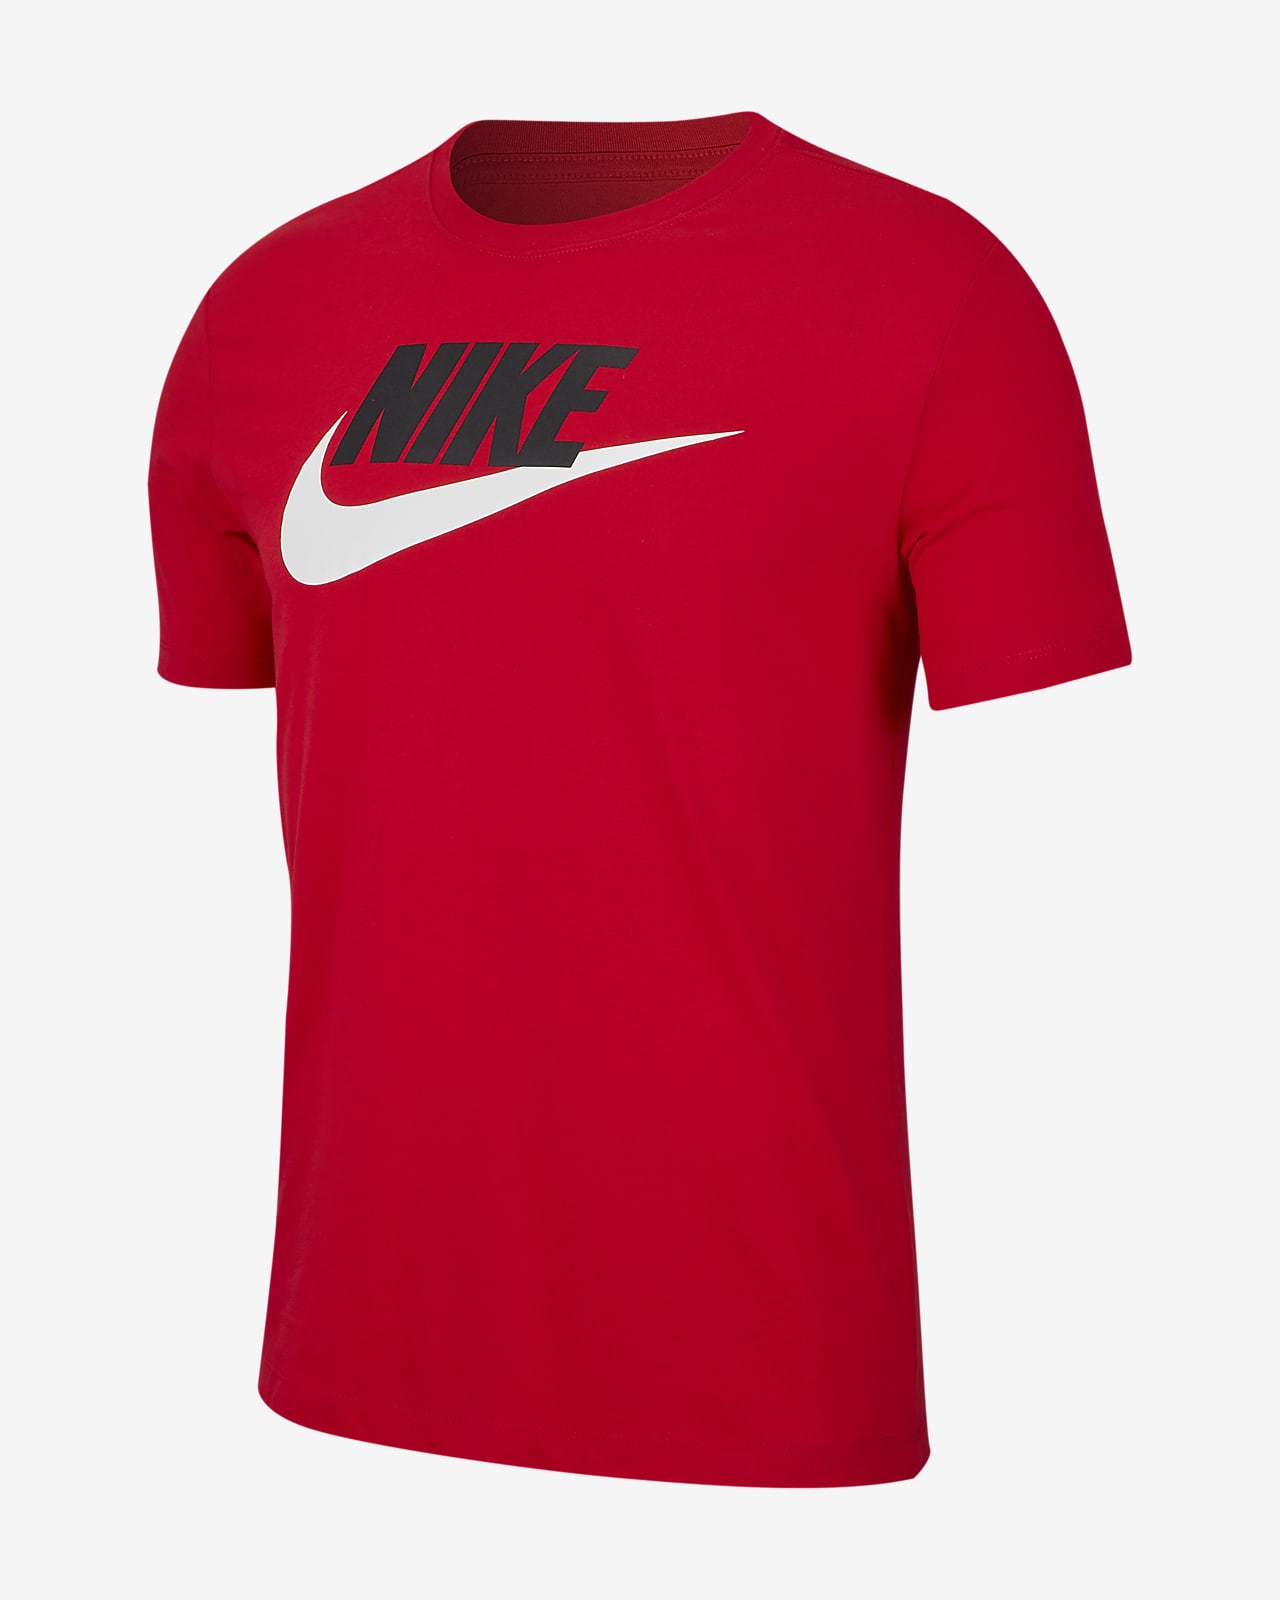 Buy > sport nike t shirt > in stock